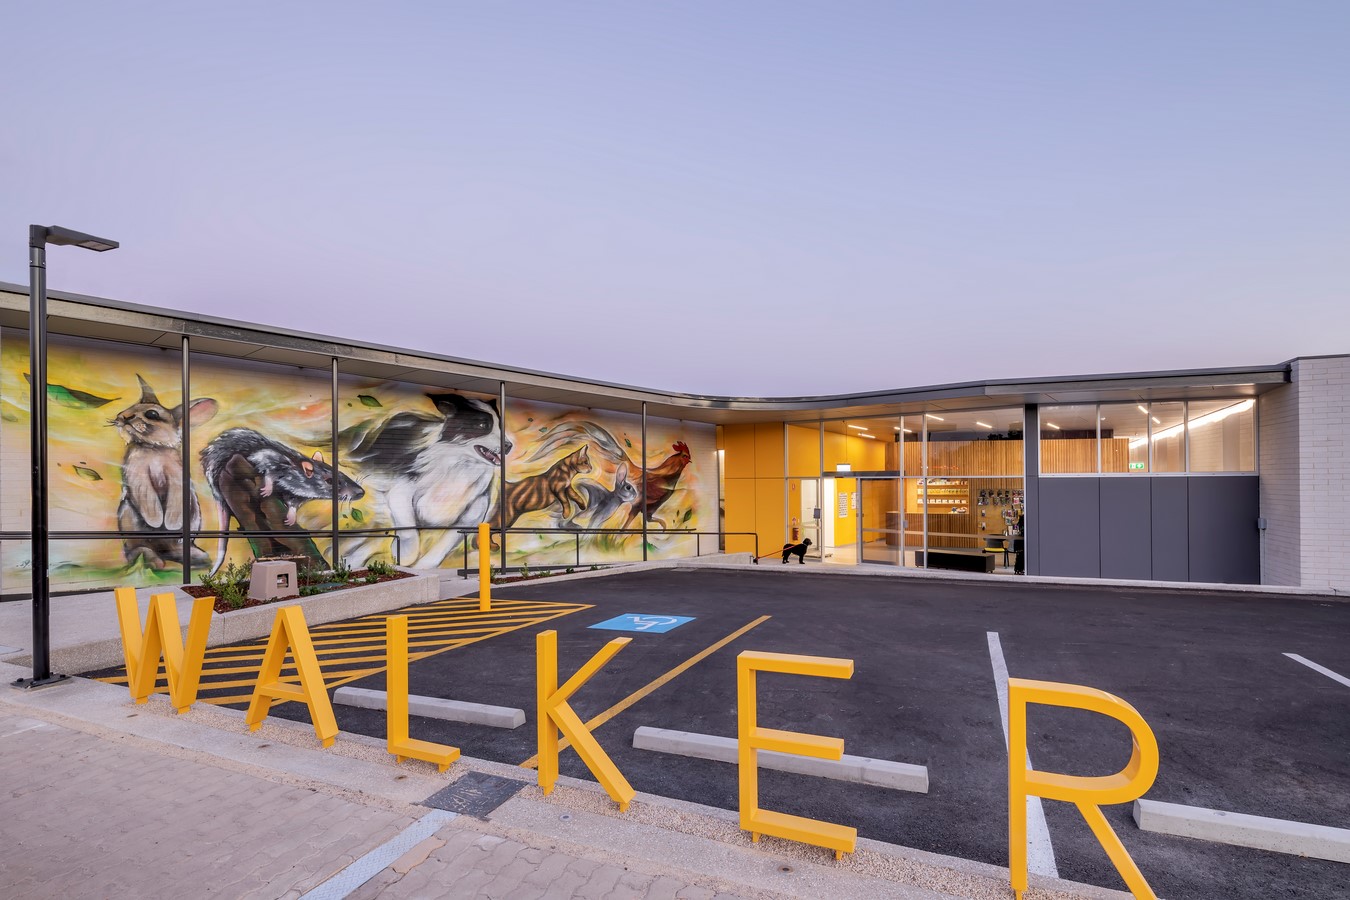 Walkerville Vet By Khab Architects - Sheet3